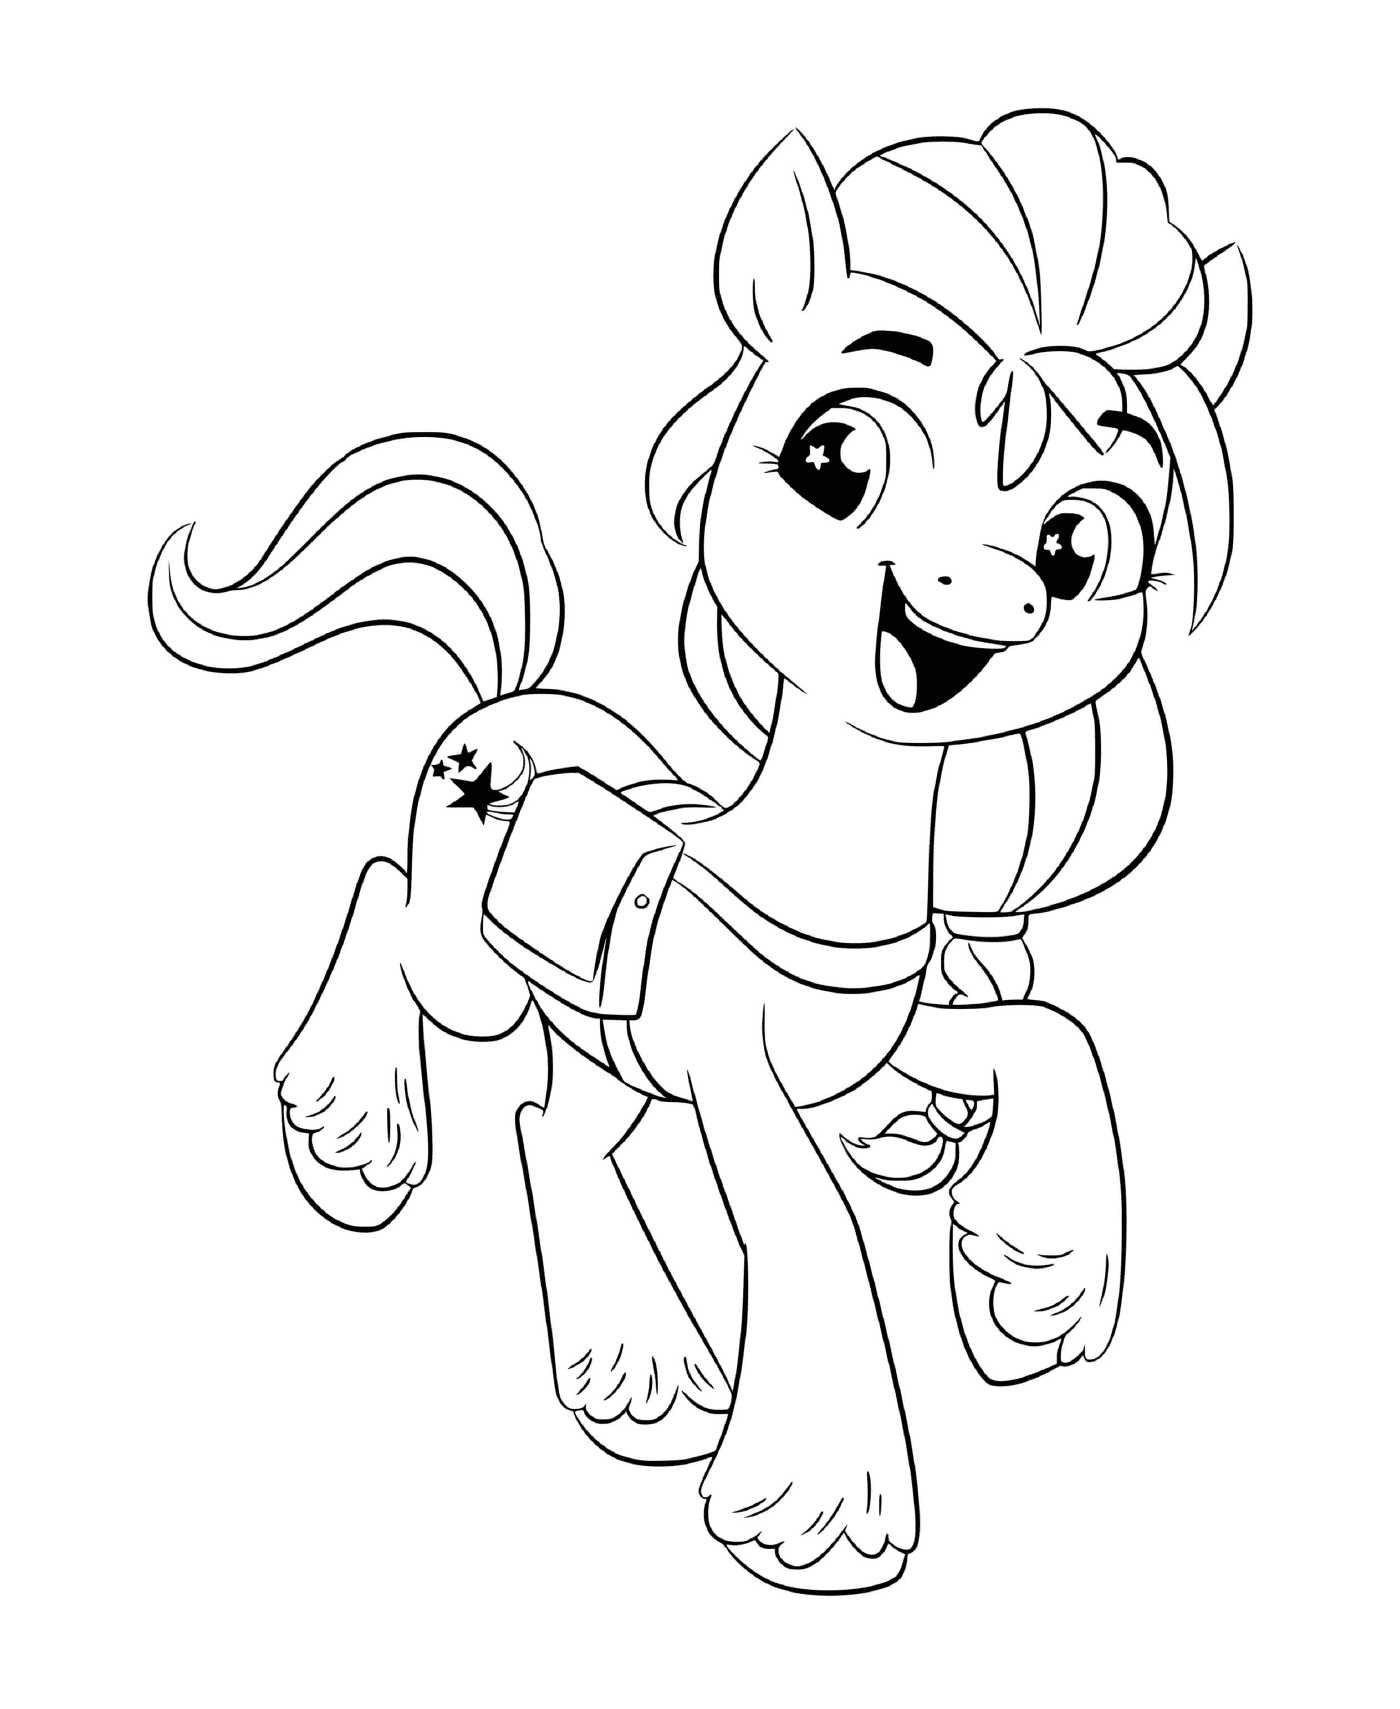  Sunny Starscout, curioso pony e avventuriero 